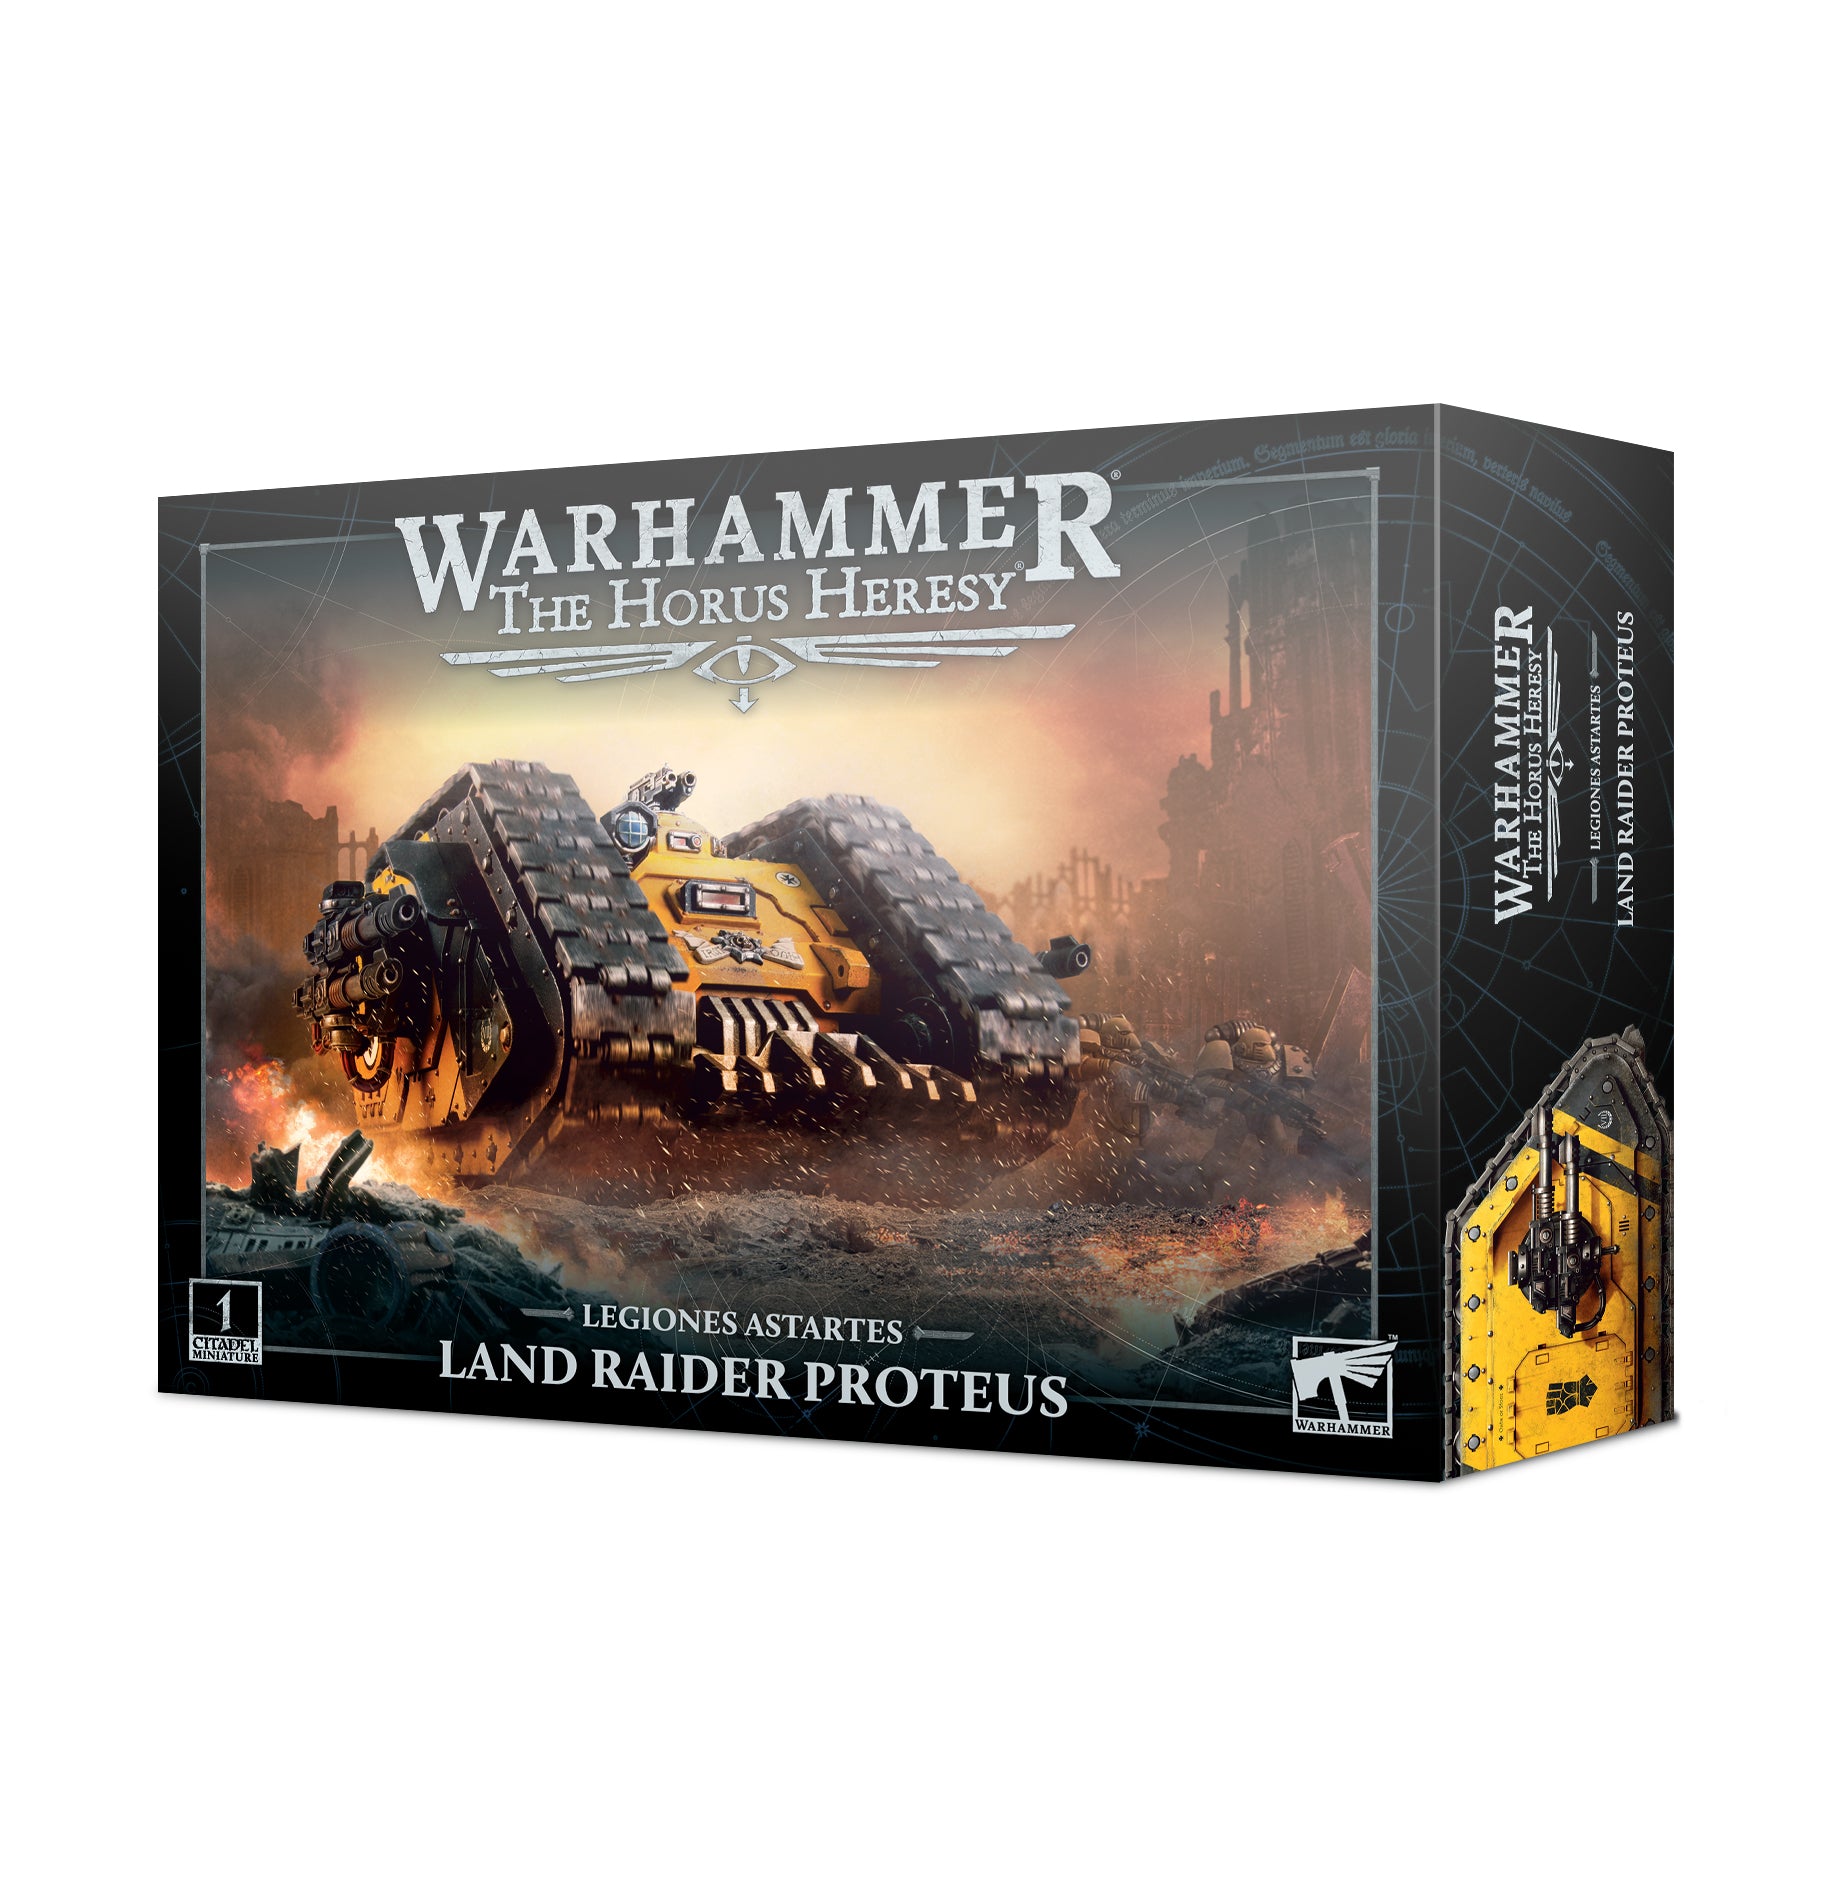 Warhammer: The Horus Heresy - Land Raider Proteus - Bards & Cards